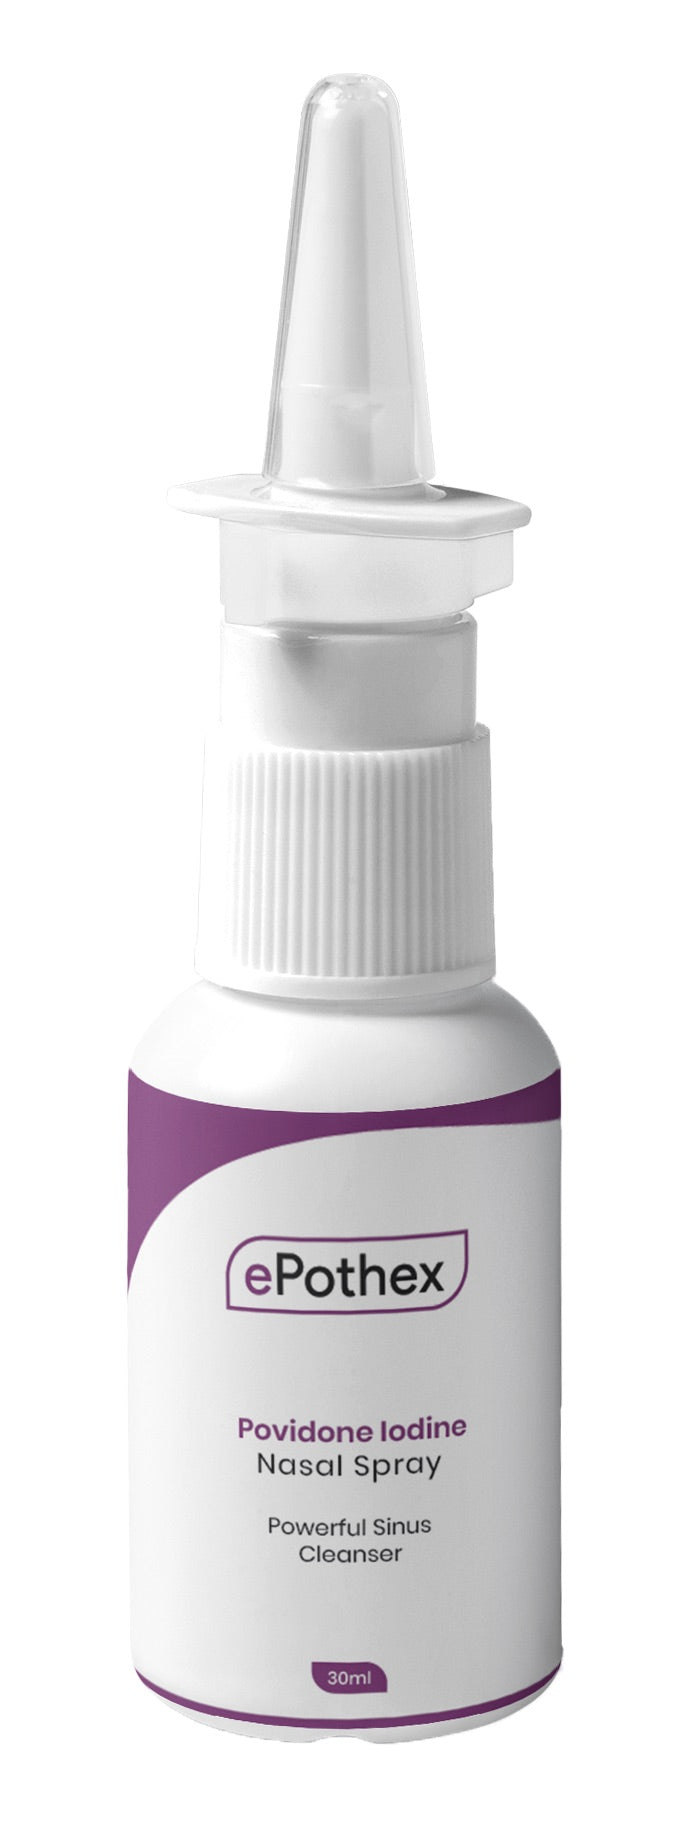 ePothex Povidone Iodine Nasal Spray - Sinus Cleanser - 30ml - ePothex